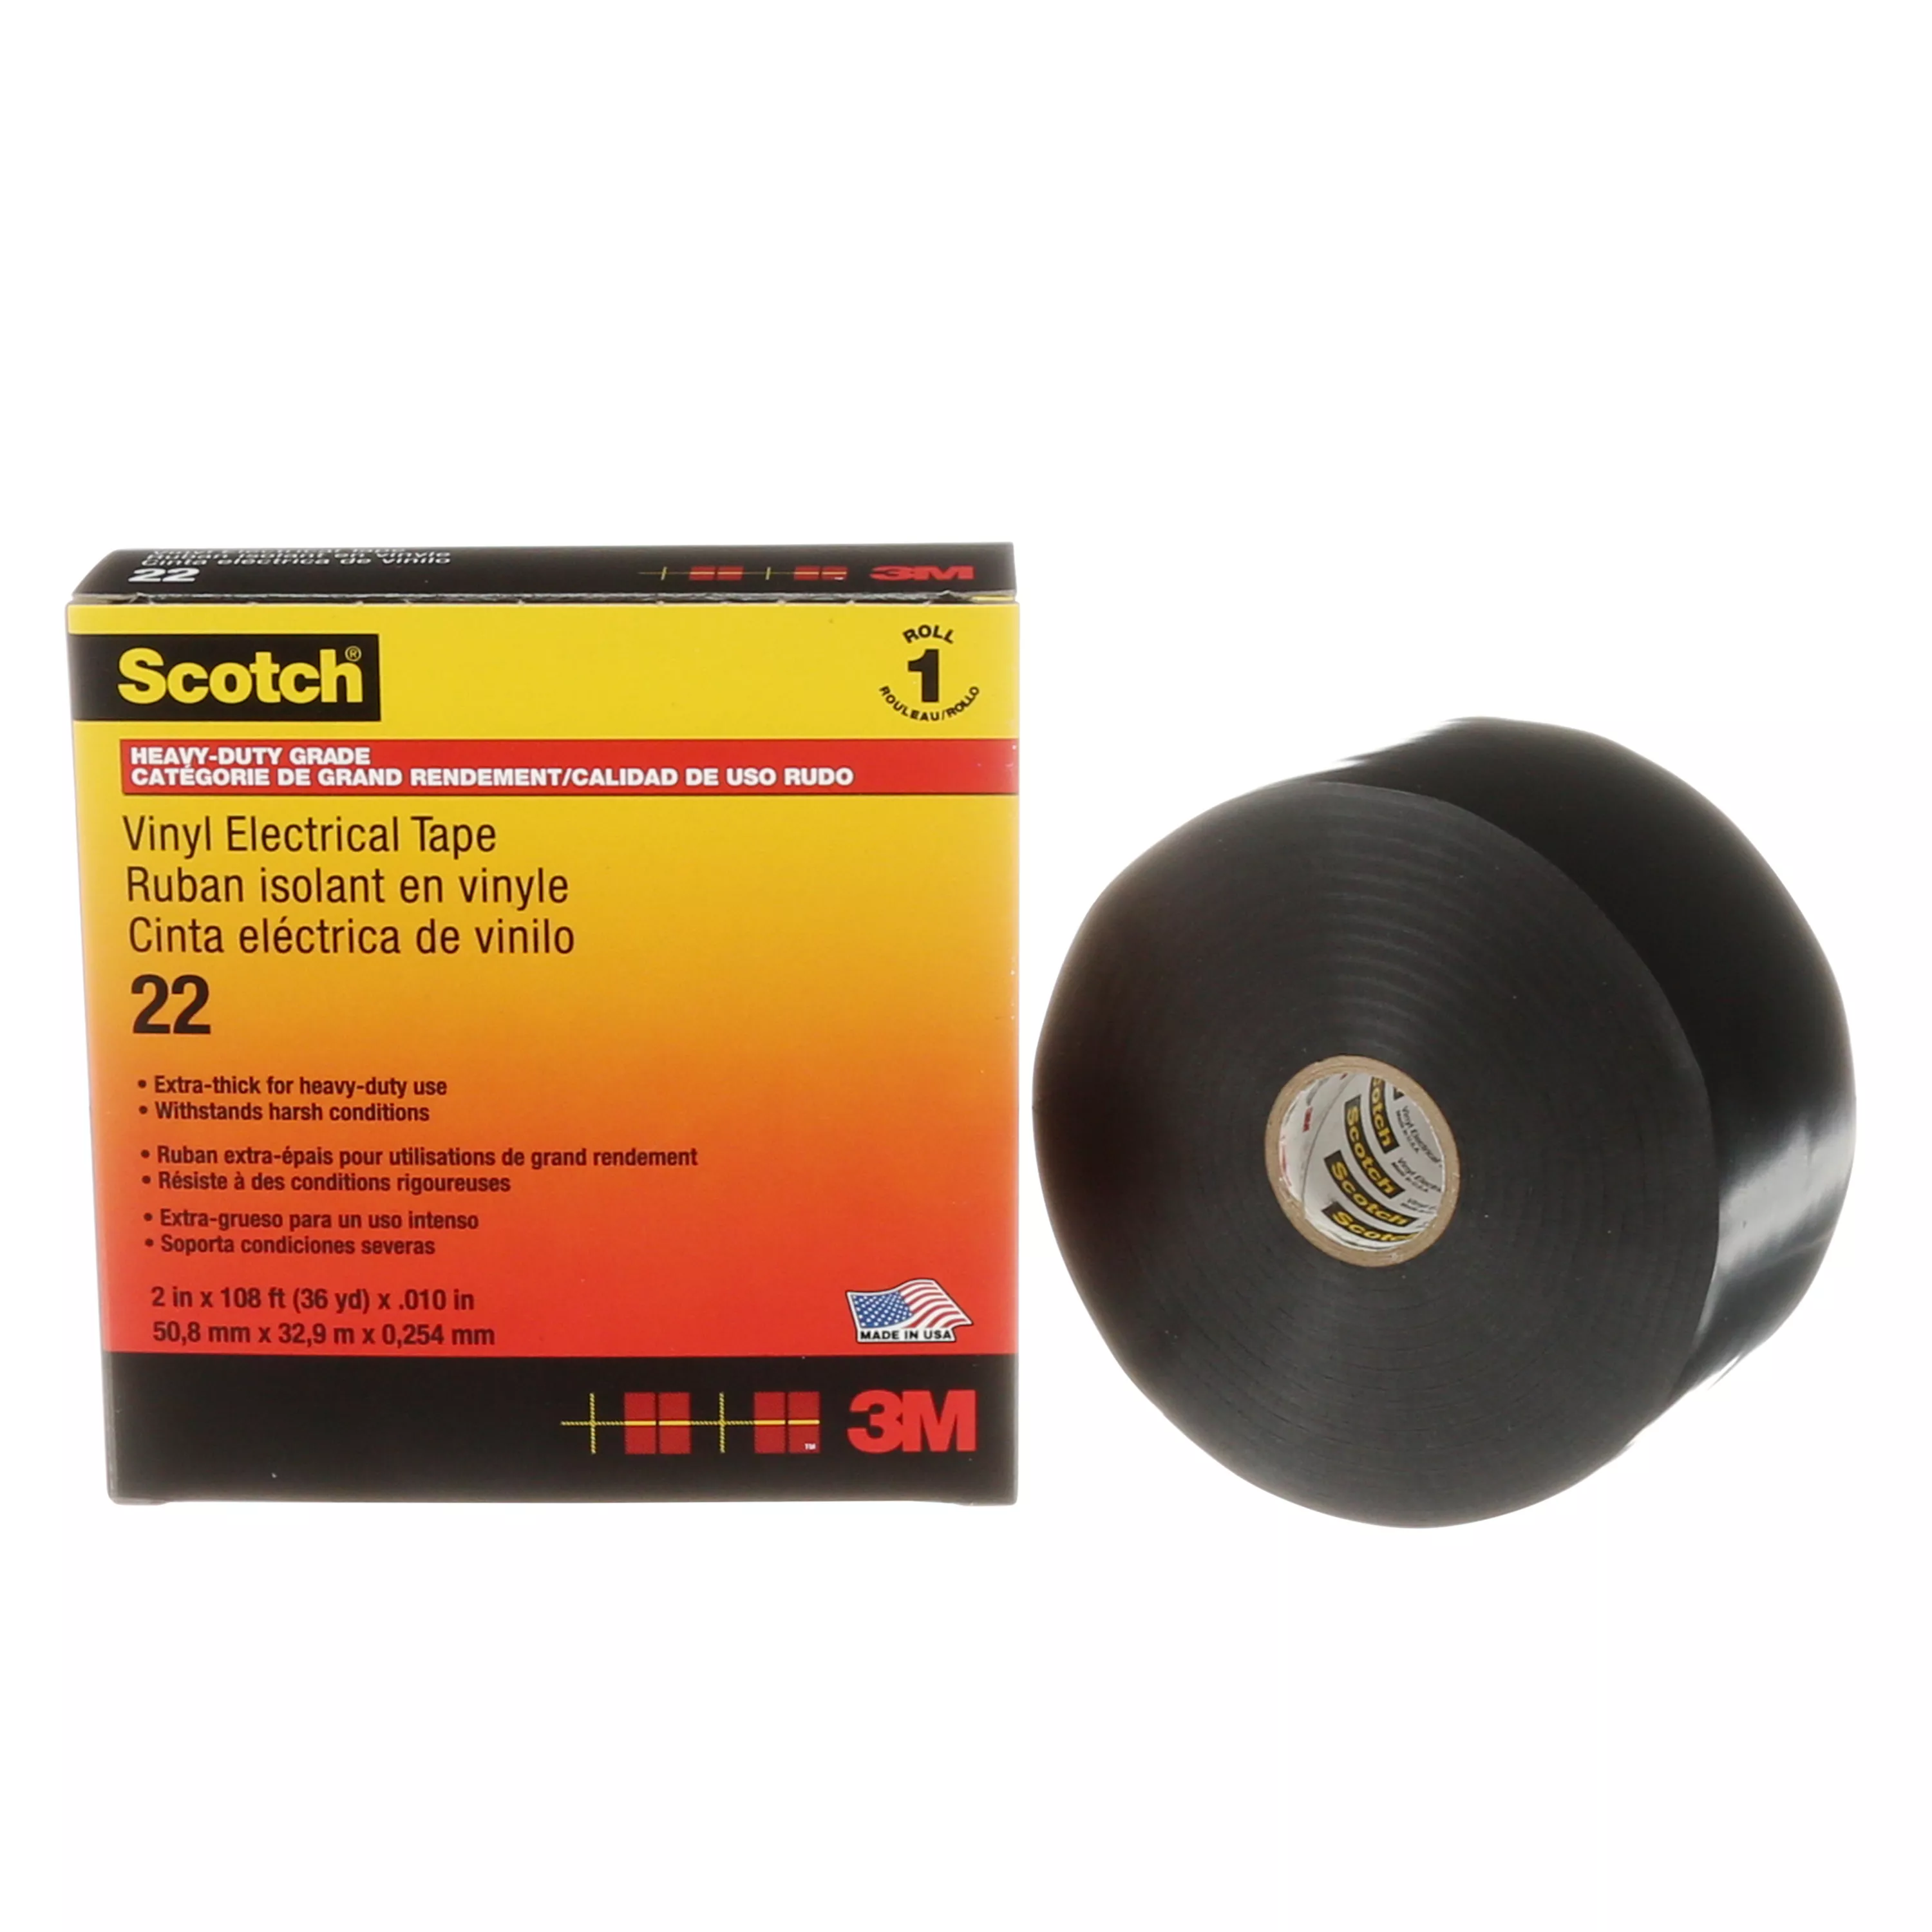 Scotch® Vinyl Electrical Tape 22, 2 in x 36 yd, Black, 1 roll/carton, 12
rolls/Case